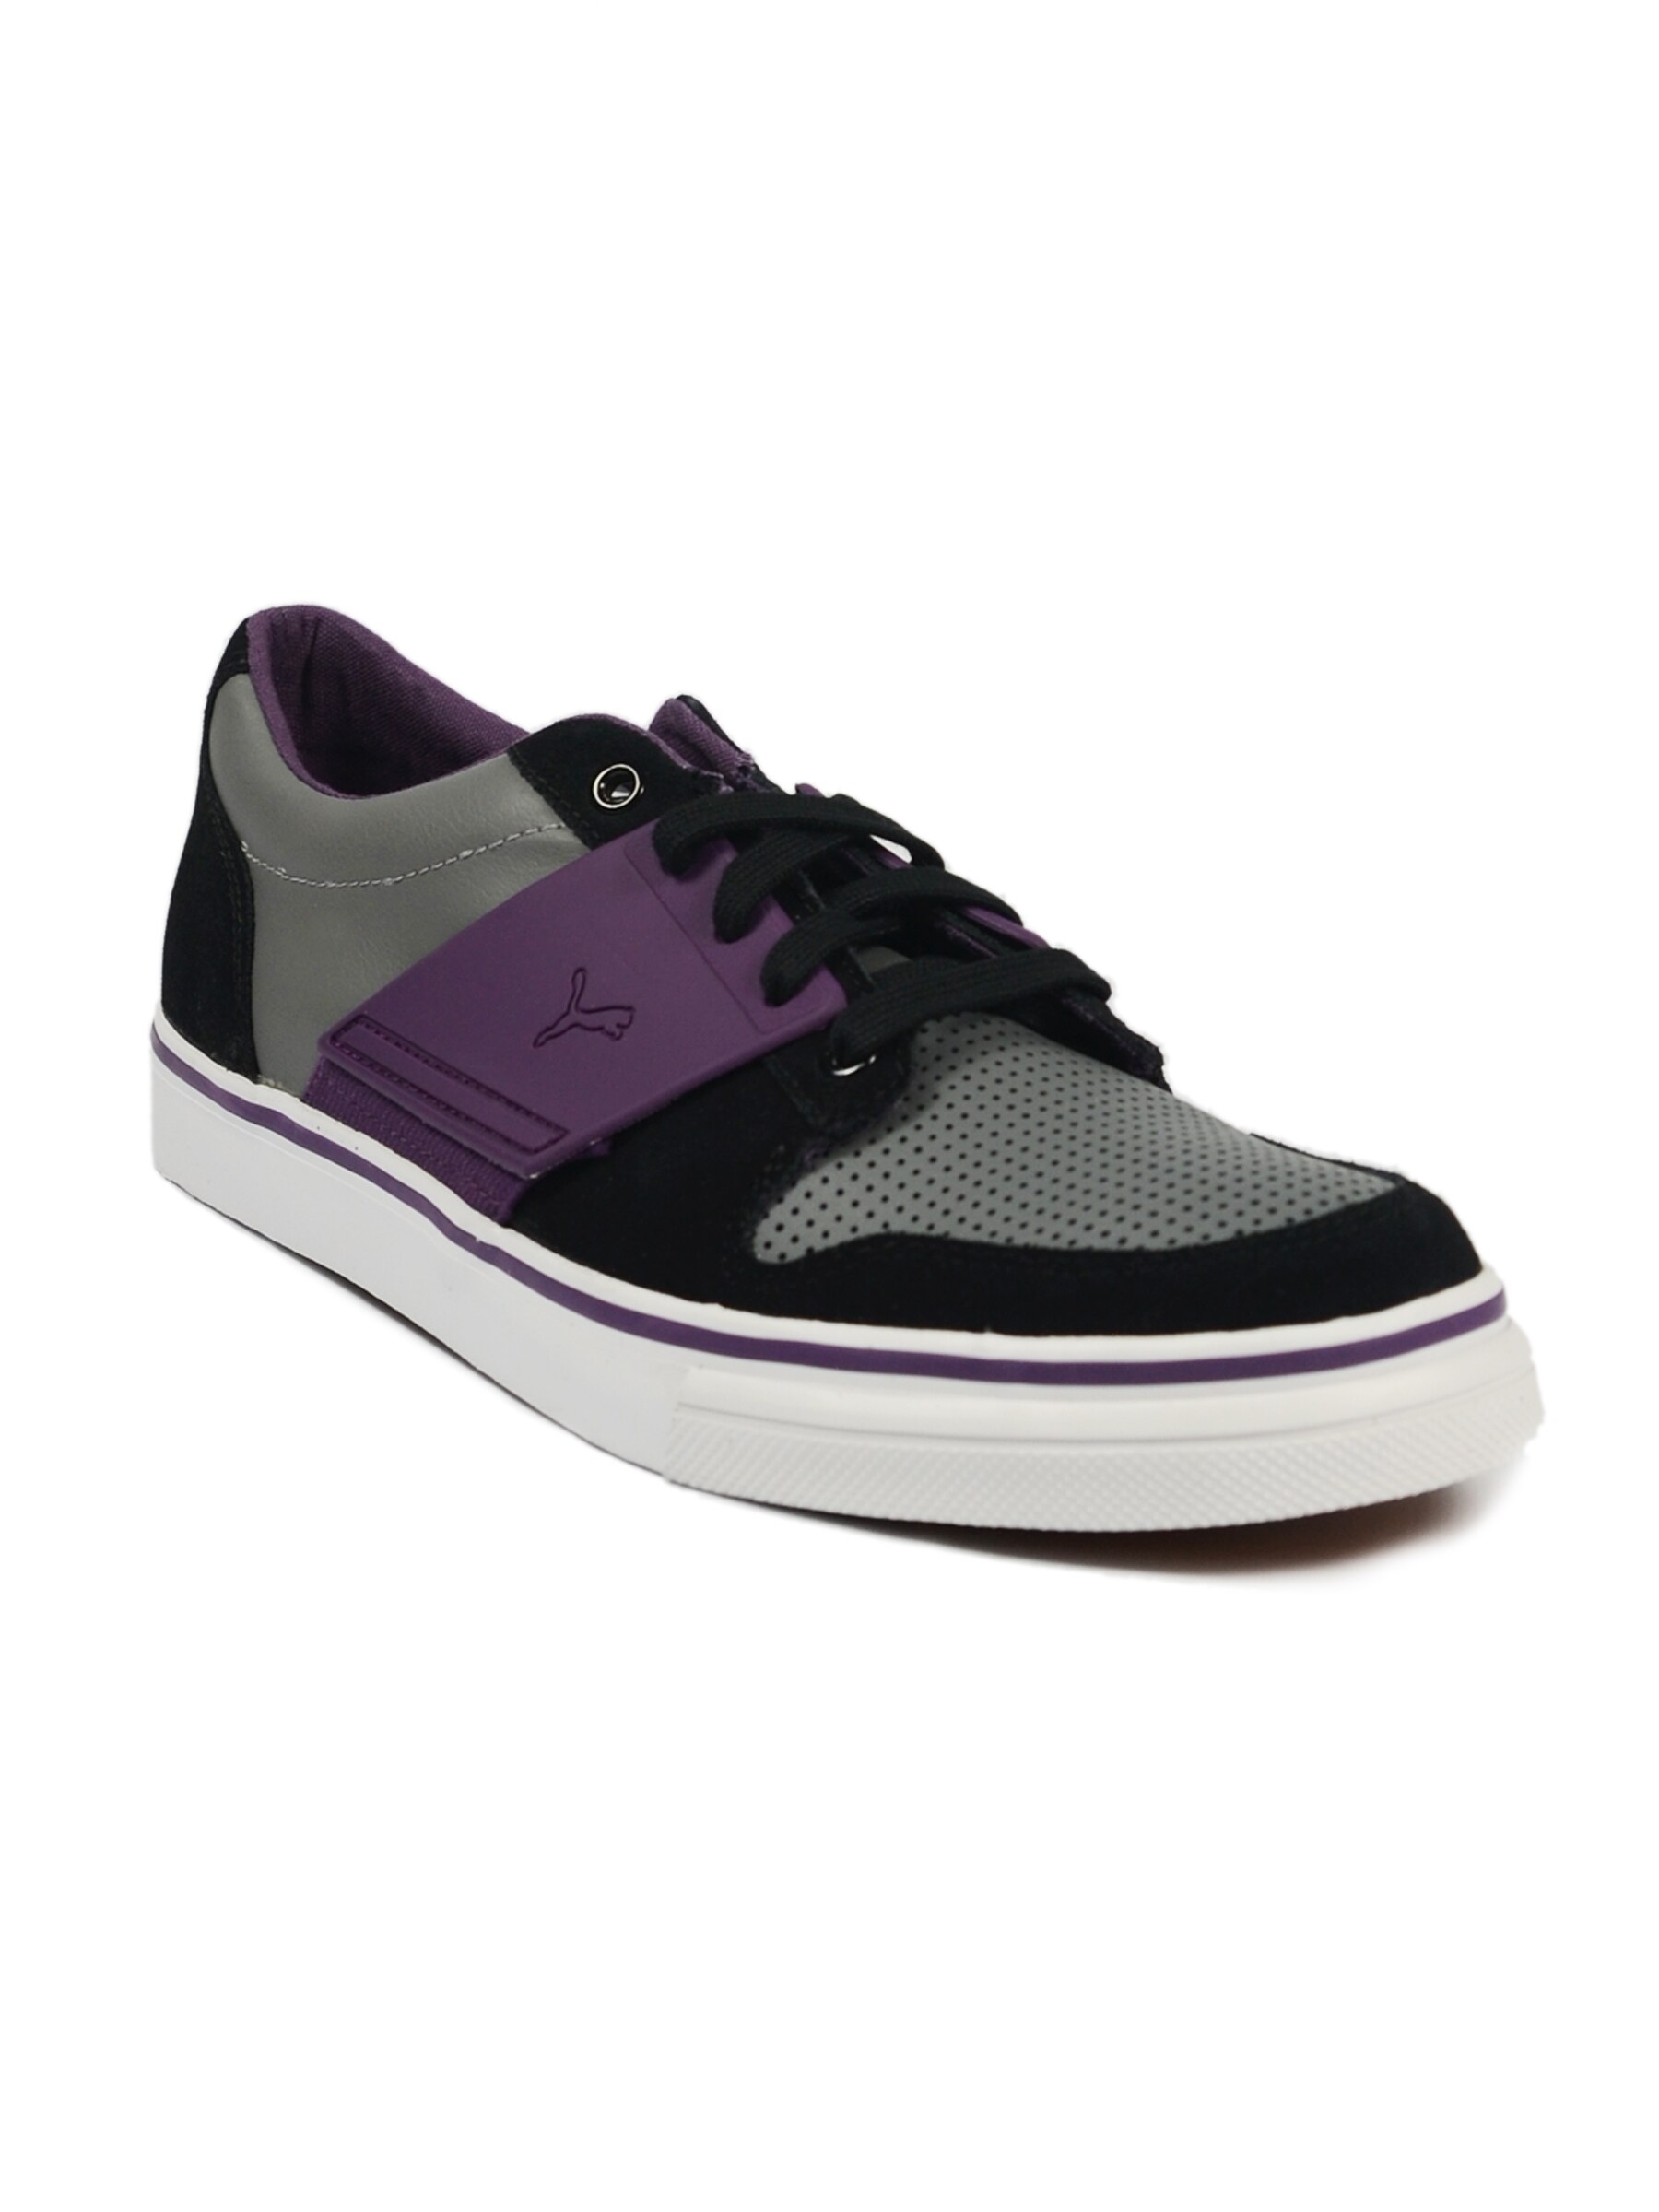 Puma Men's El Ace 2 Black Grey Purple Shoe